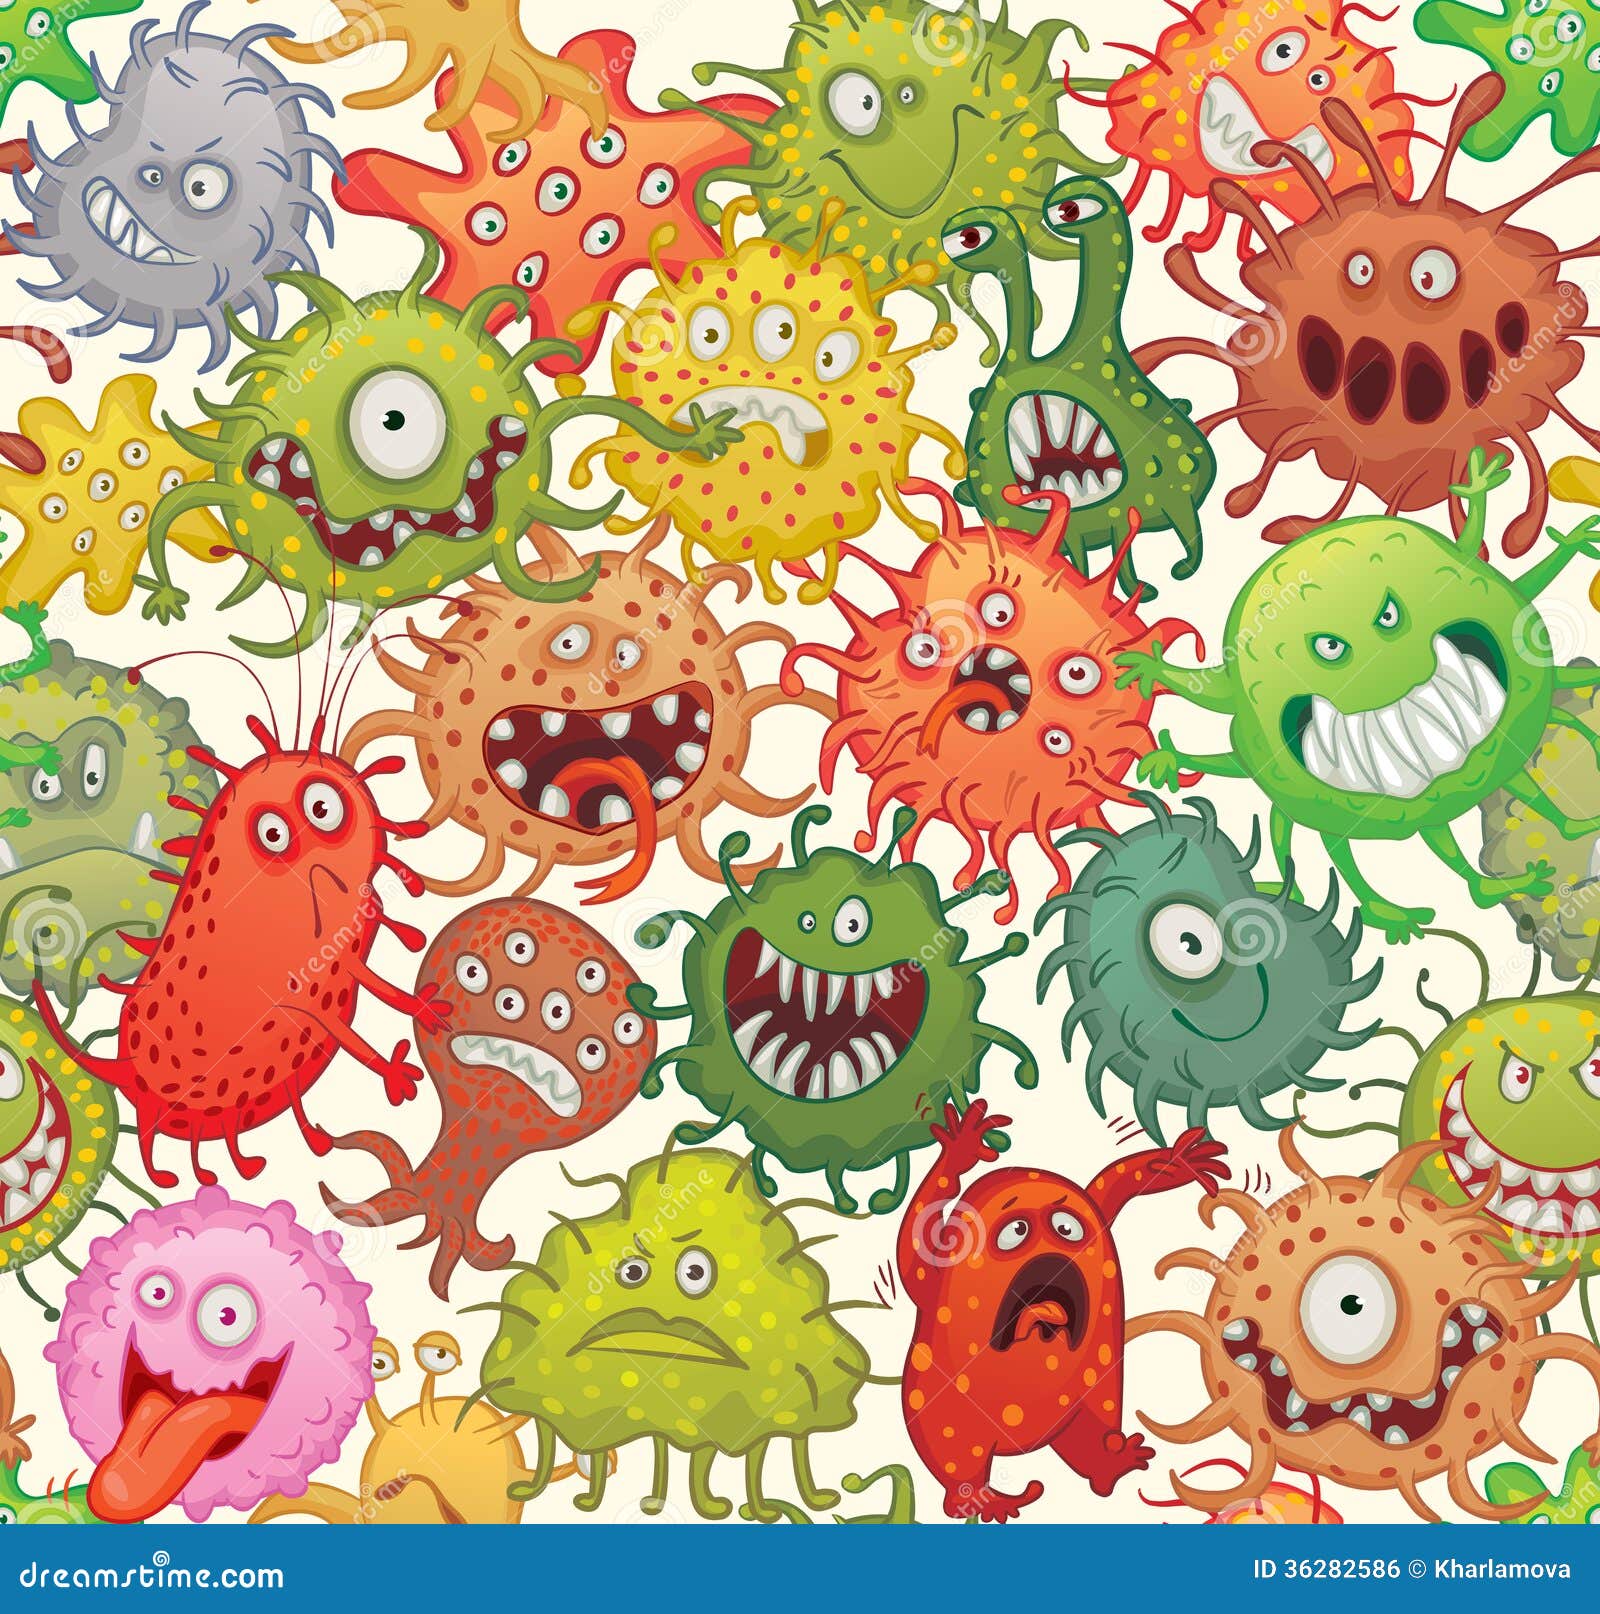 dangerous microorganisms. seamless pattern